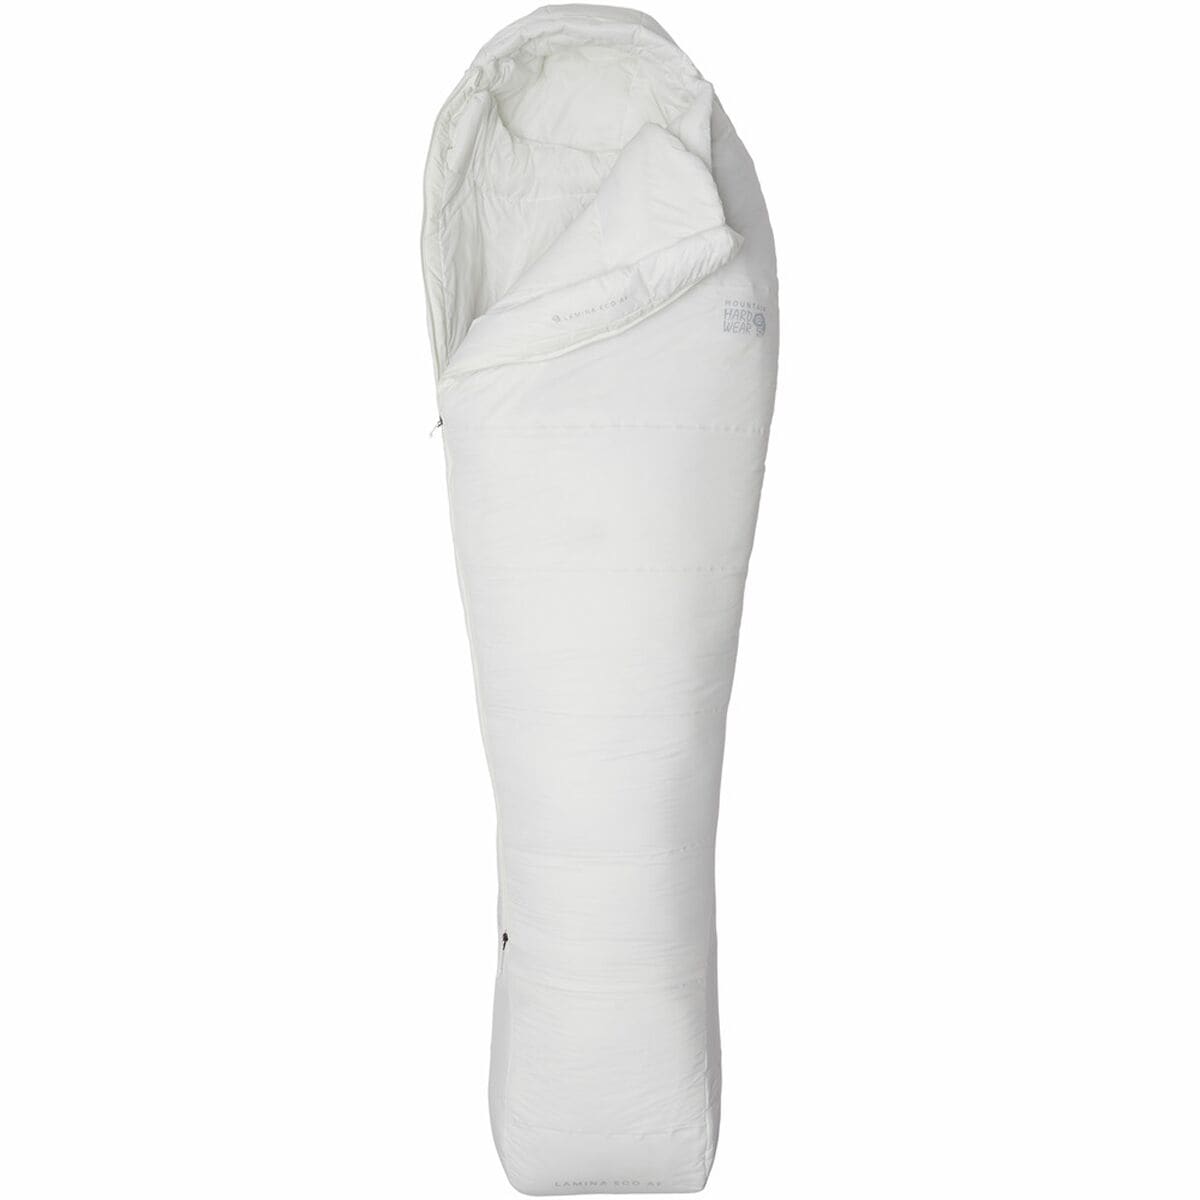 Mountain Hardwear Lamina Eco AF Sleeping Bag: 15F Synthetic